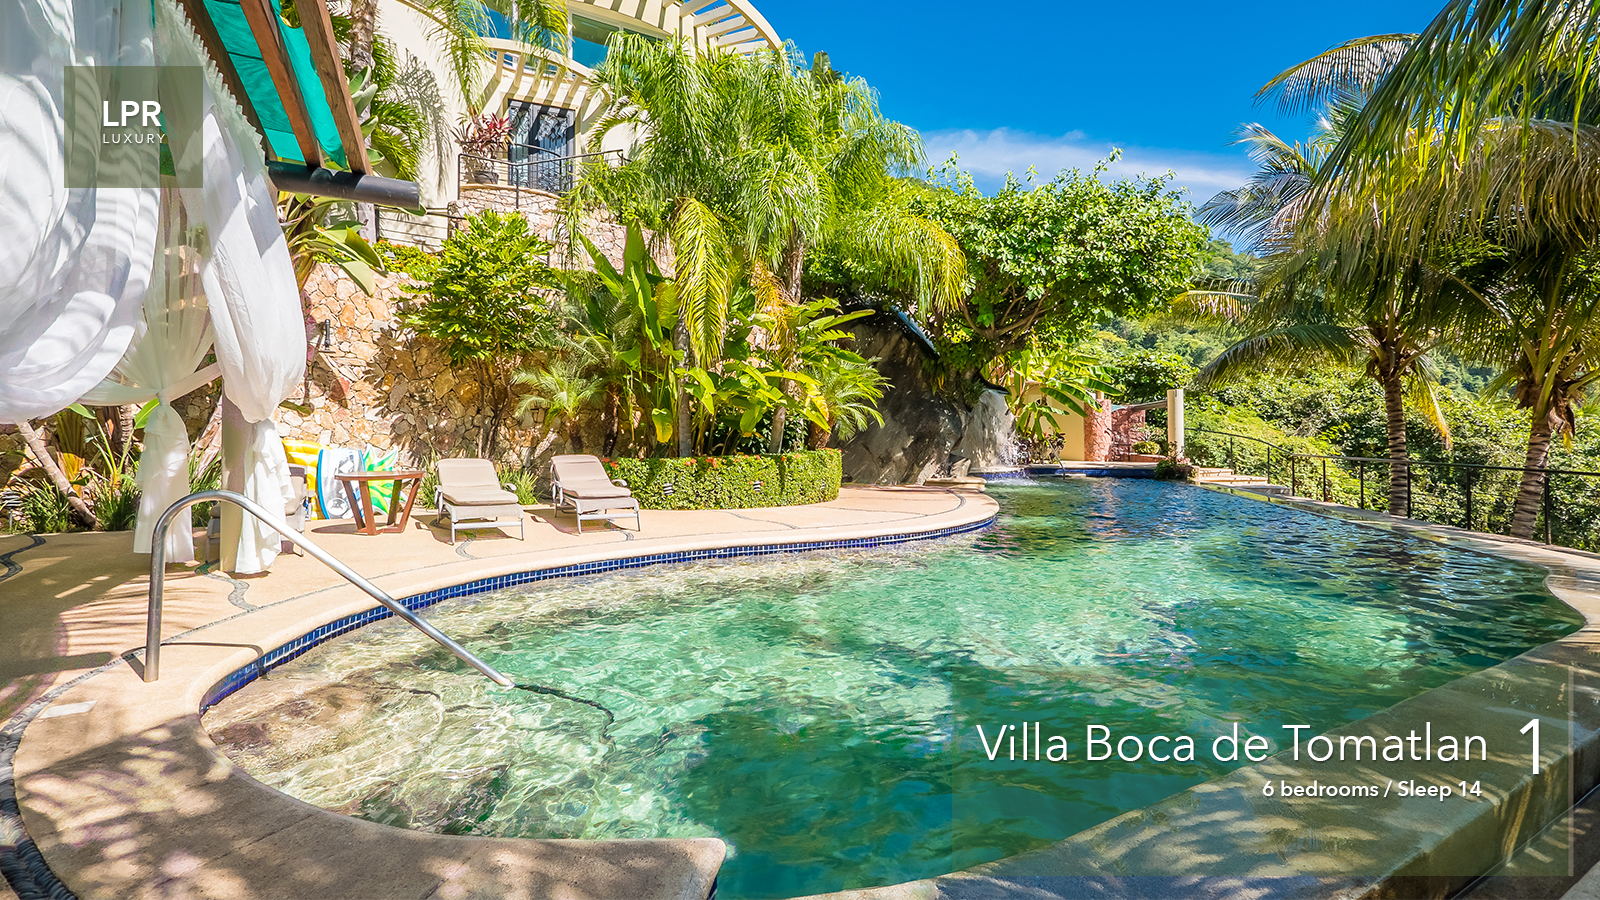 Villa Boca de Tomatlan 1 - Puerto Vallarta vacation rentals and real estate - Puerto Vallarta, Mexico